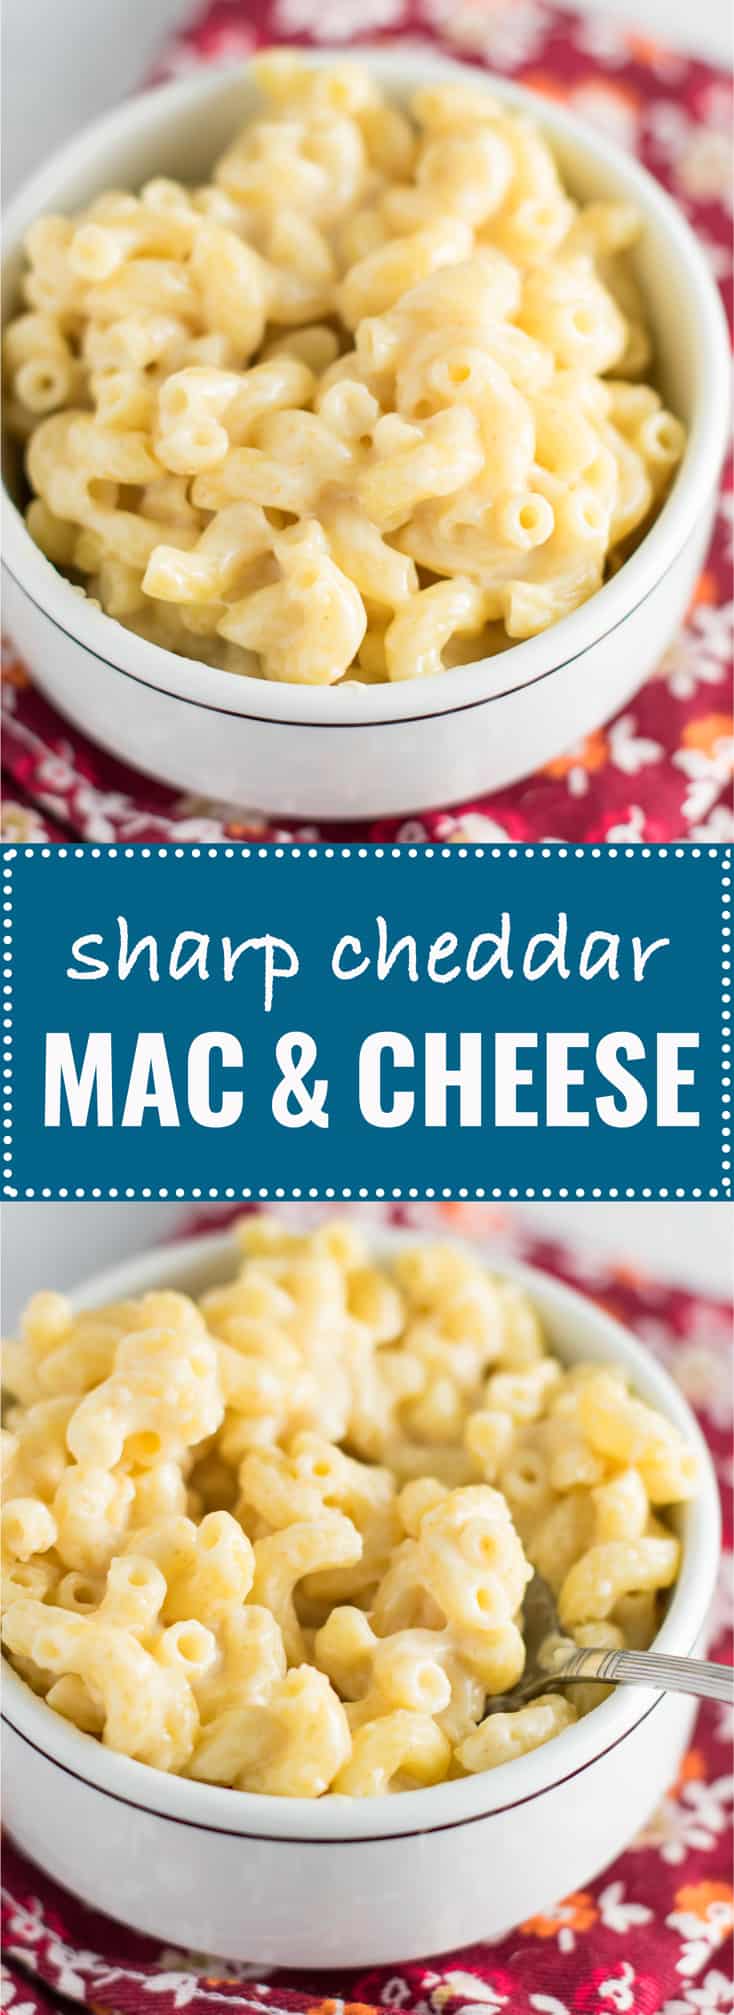 sharp cheddar mac and cheese recipe